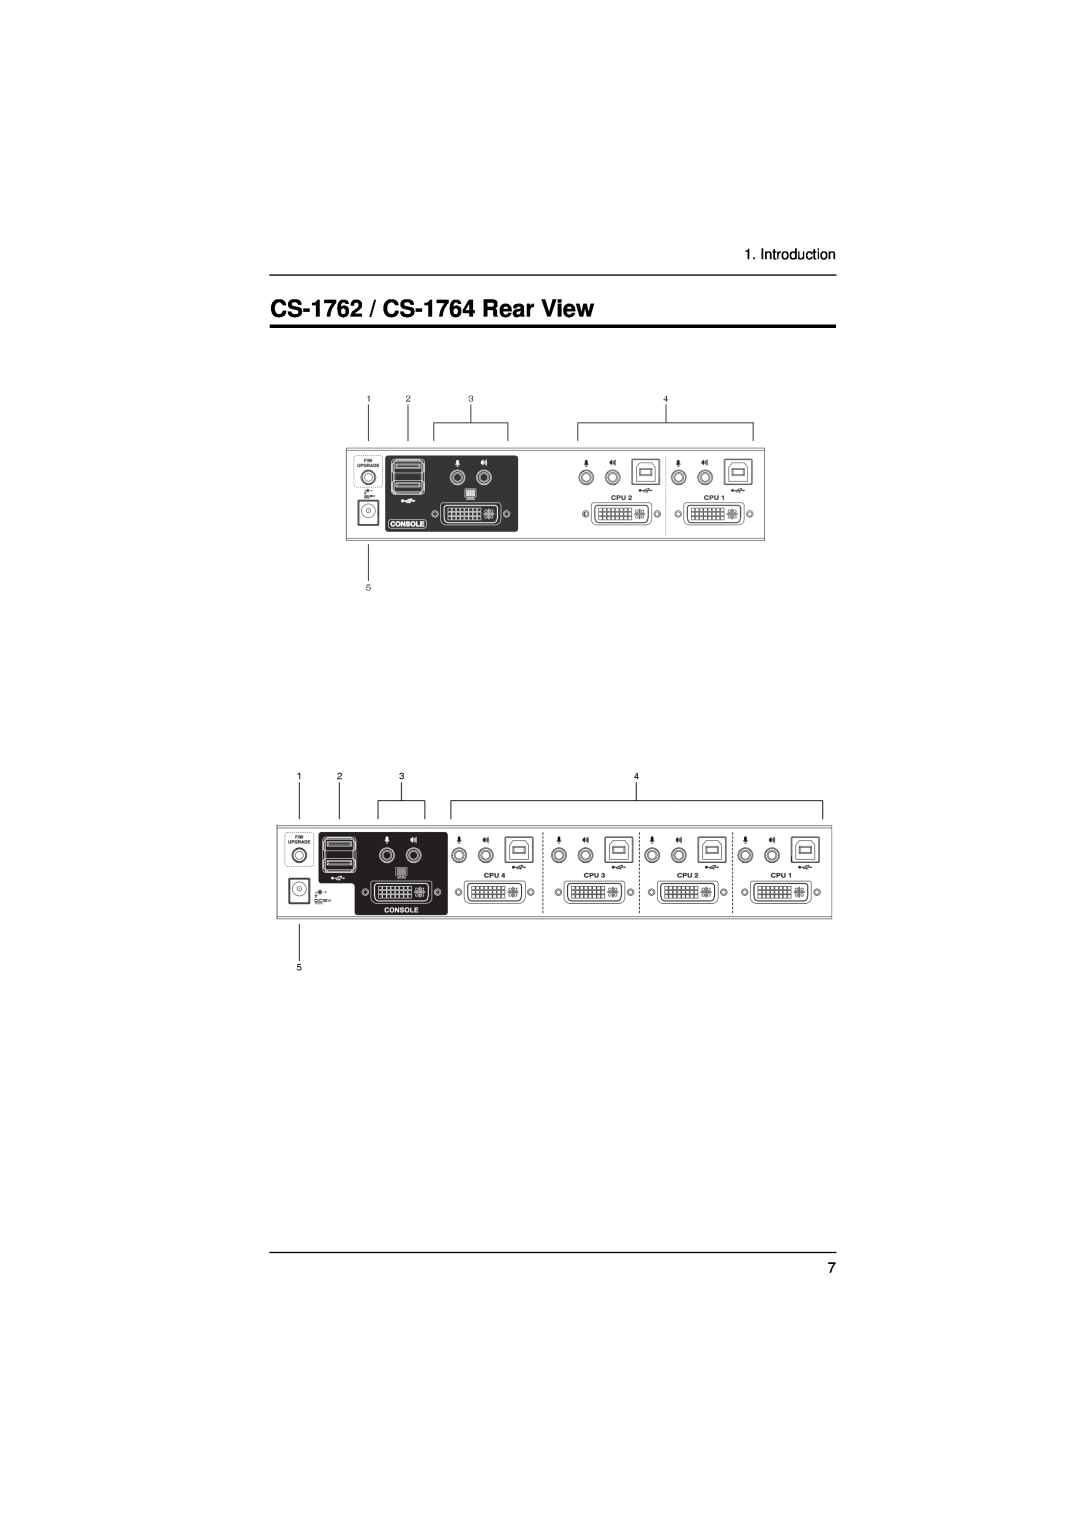 ATEN Technology user manual CS-1762 / CS-1764 Rear View, Introduction 